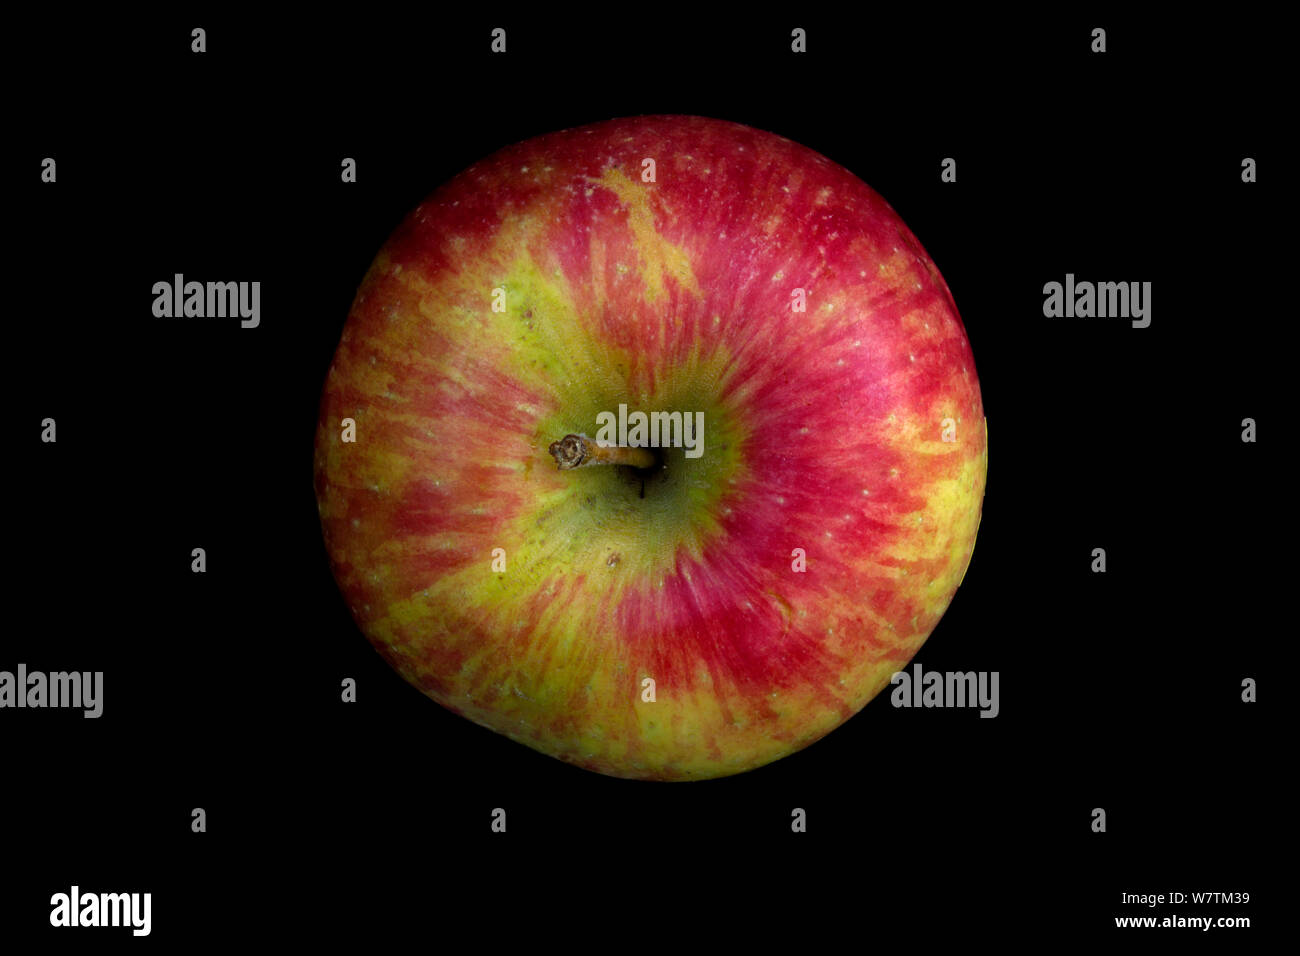 https://c8.alamy.com/comp/W7TM39/honeycrisp-apple-developed-in-minnesota-1961-cross-between-keepsake-and-unknown-W7TM39.jpg